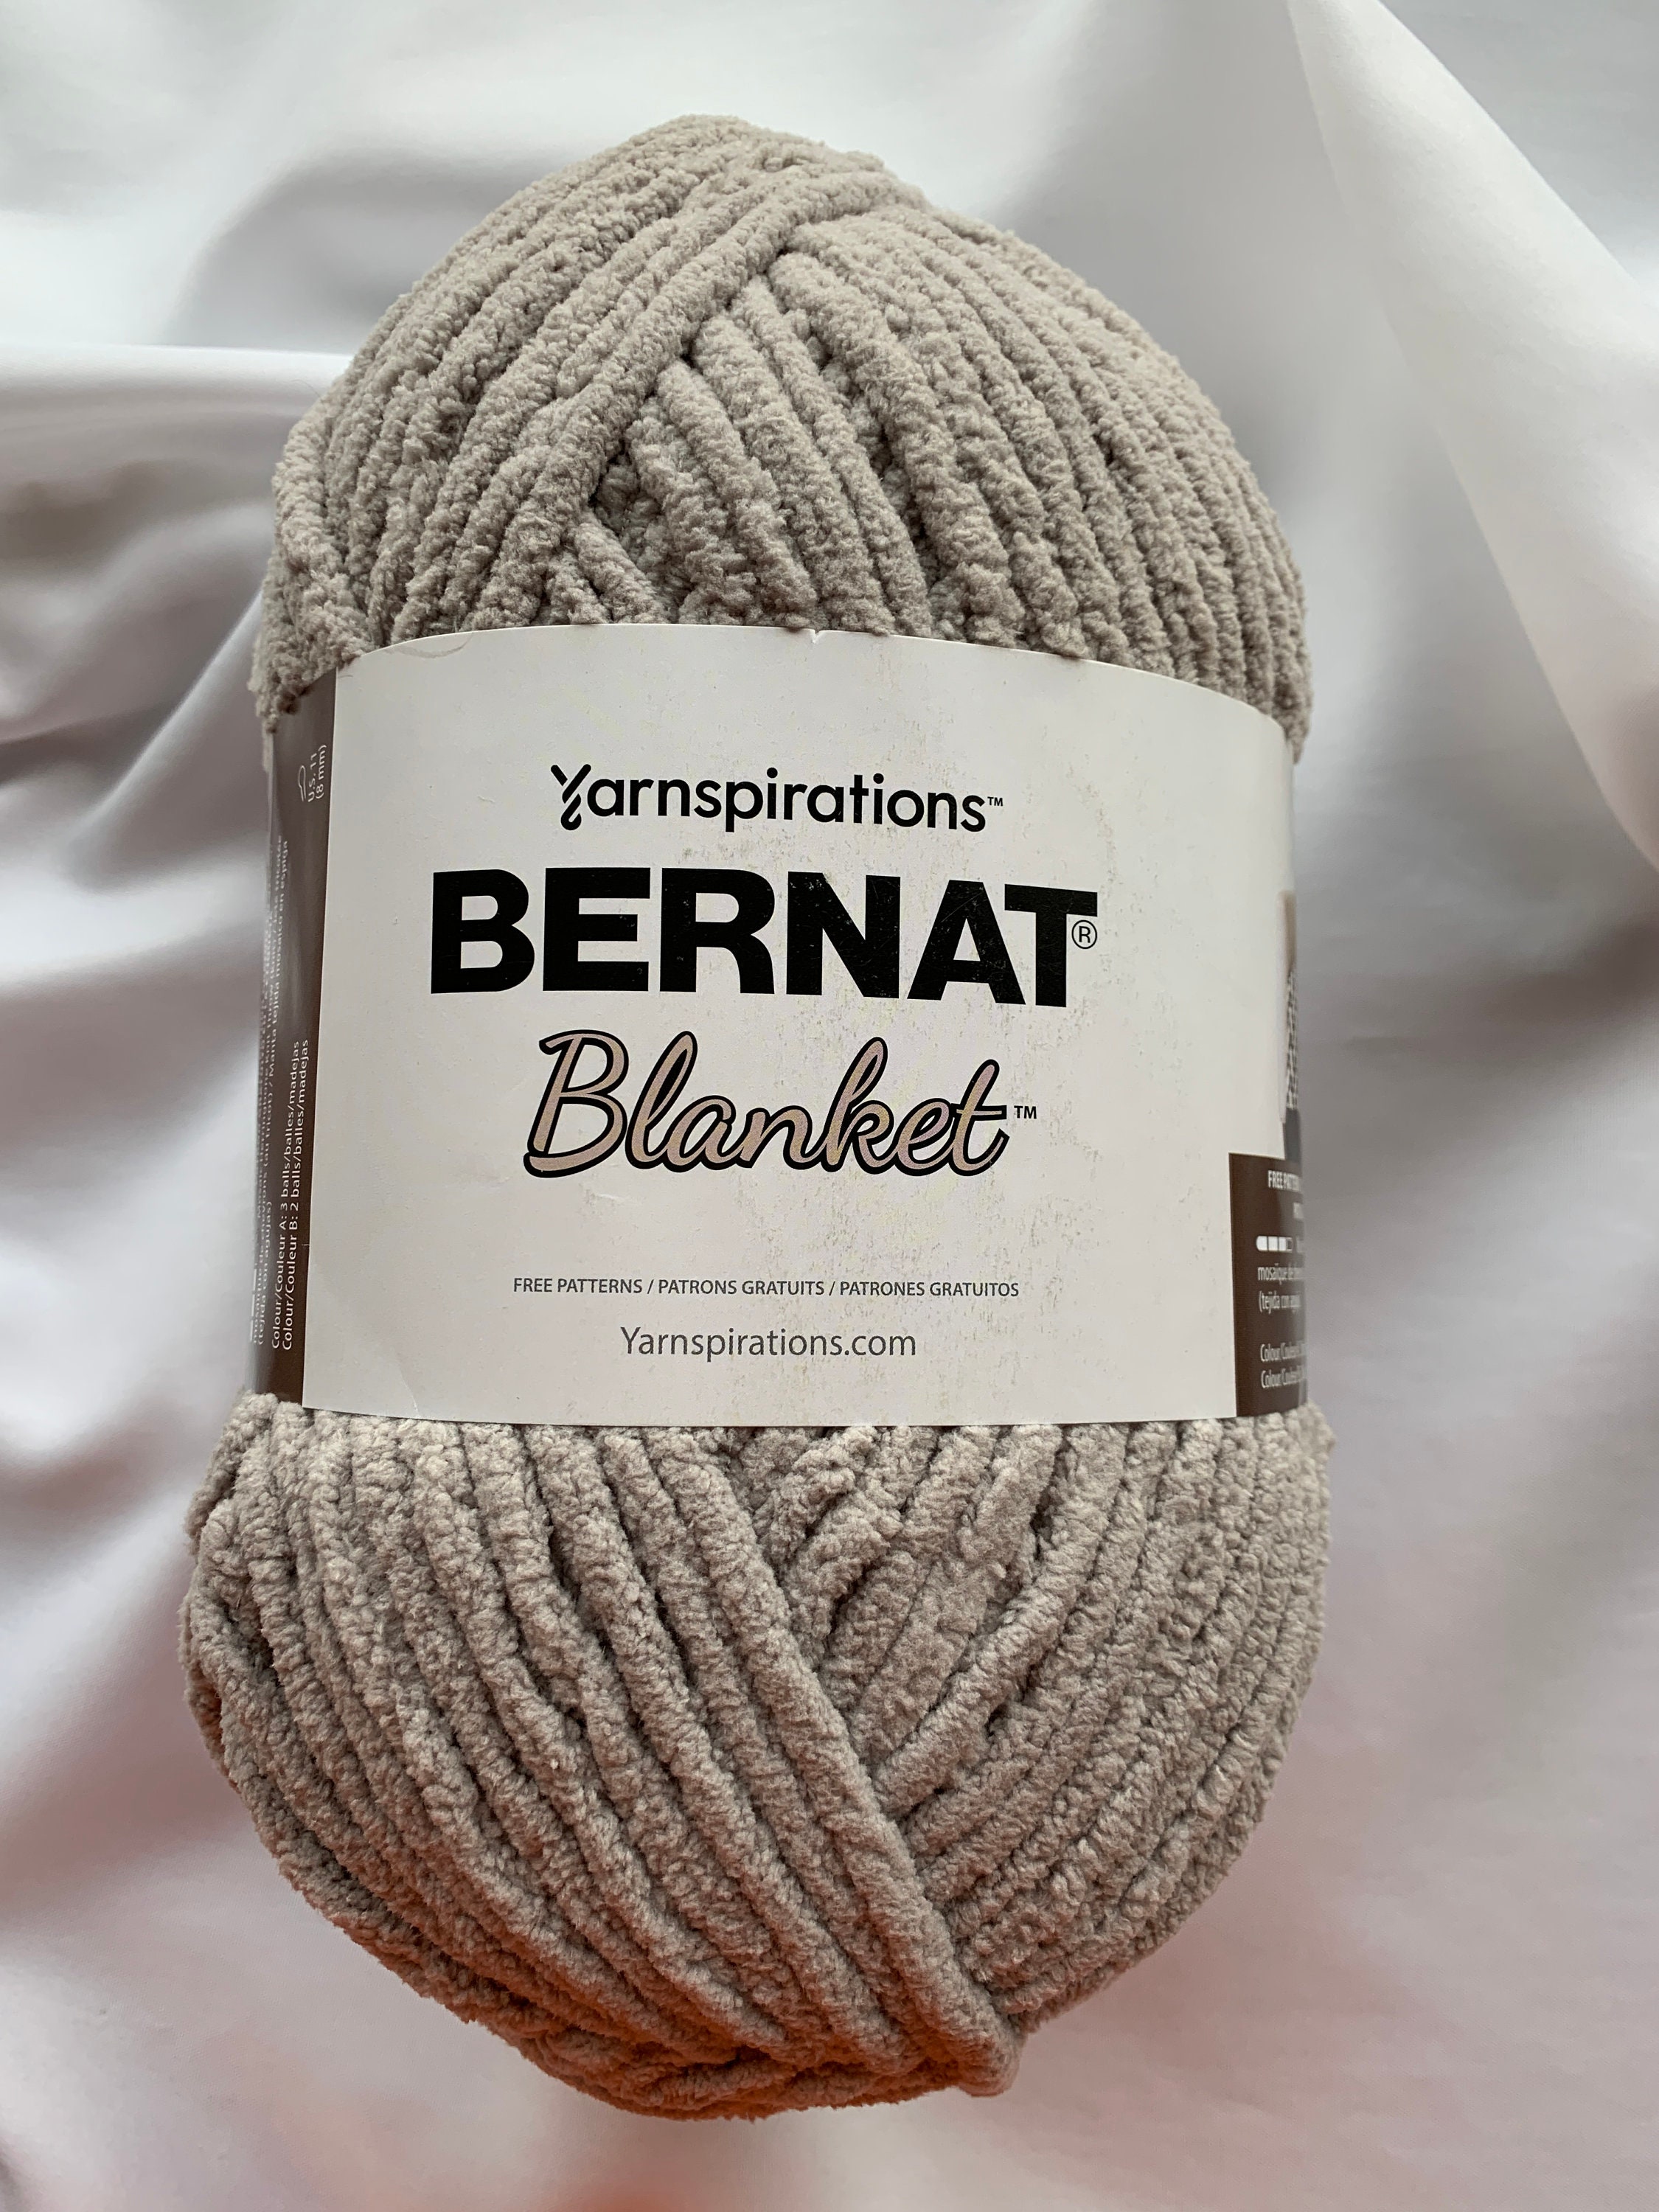 Bernat Blanket #6 Super Bulky Polyester Yarn, Gray Storm Varg 10.5oz/300g, 220 Yards (4 Pack)